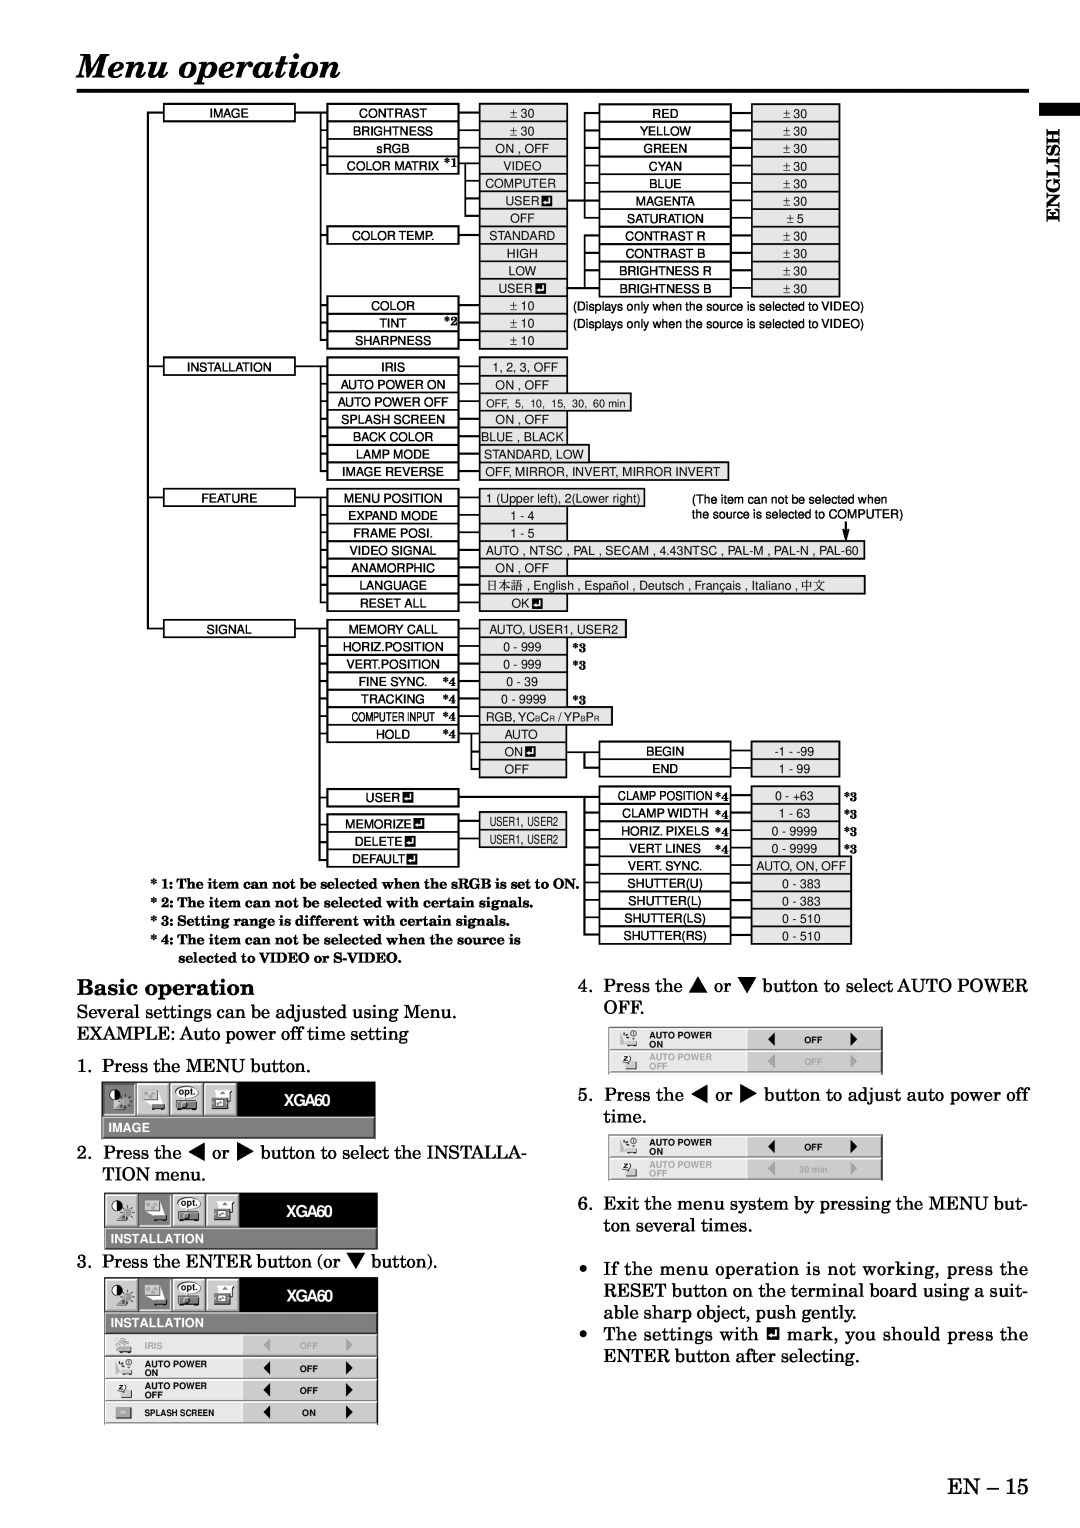 Mitsubishi Electronics X500U user manual Menu operation, Basic operation, English 